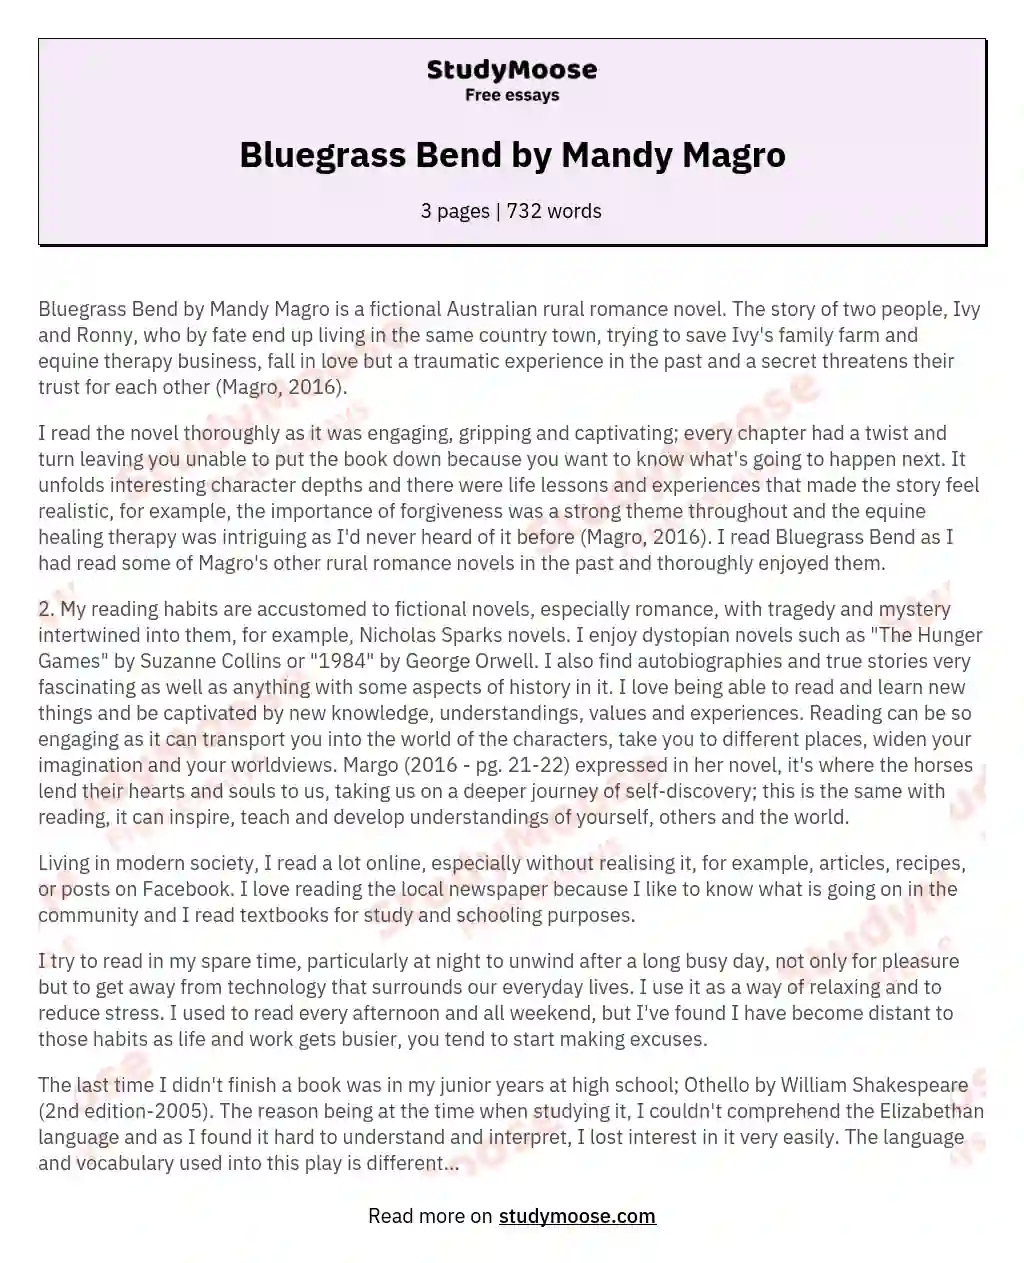 Bluegrass Bend by Mandy Magro